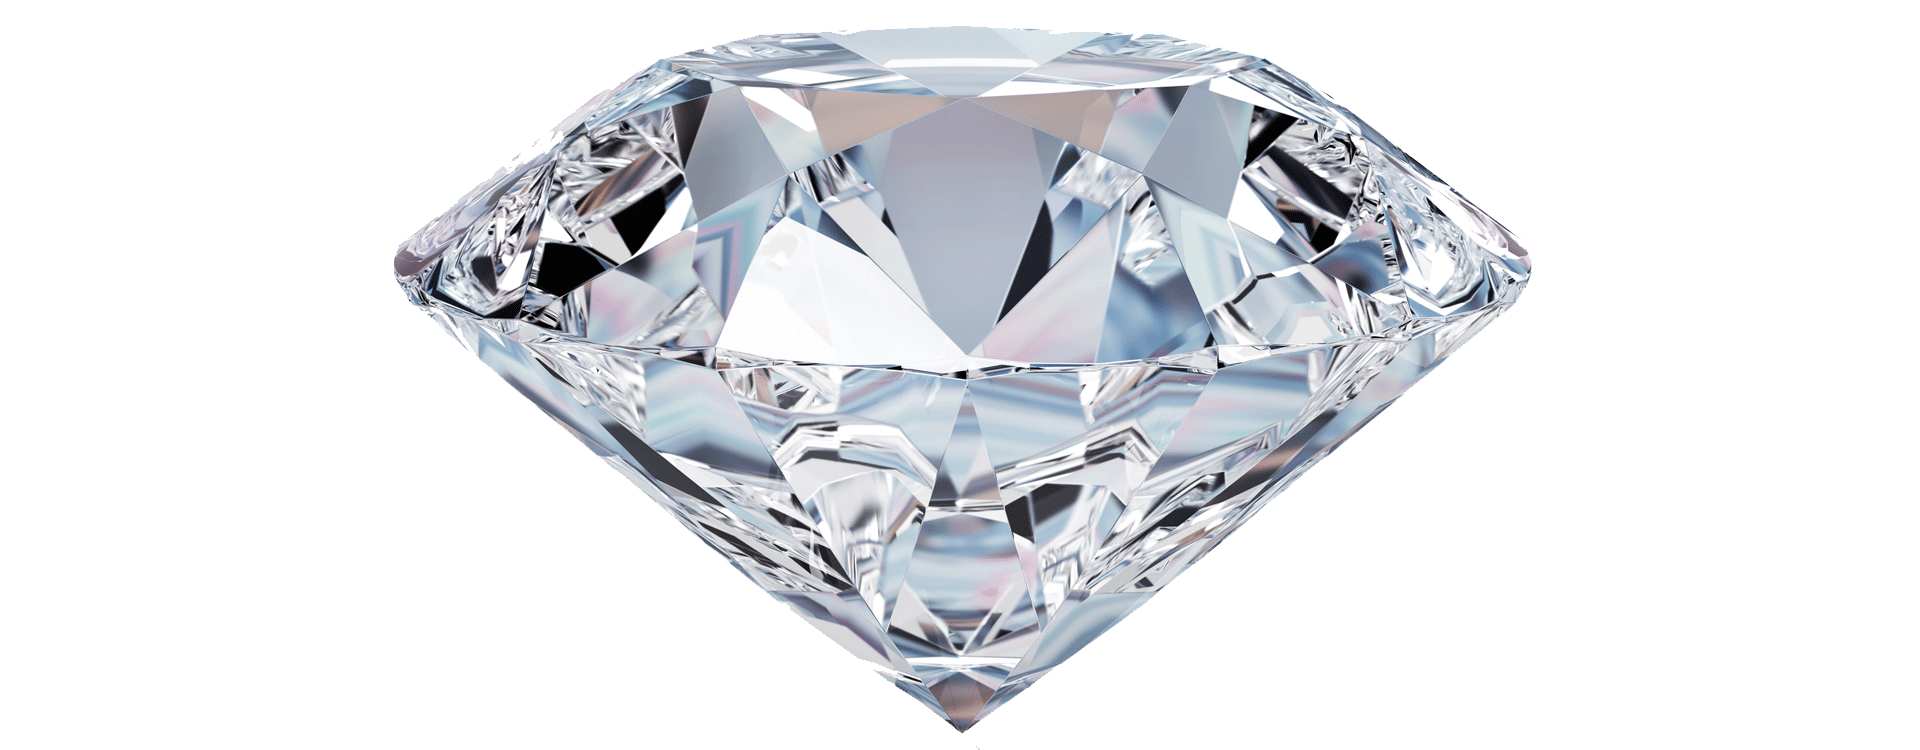 About Diamond